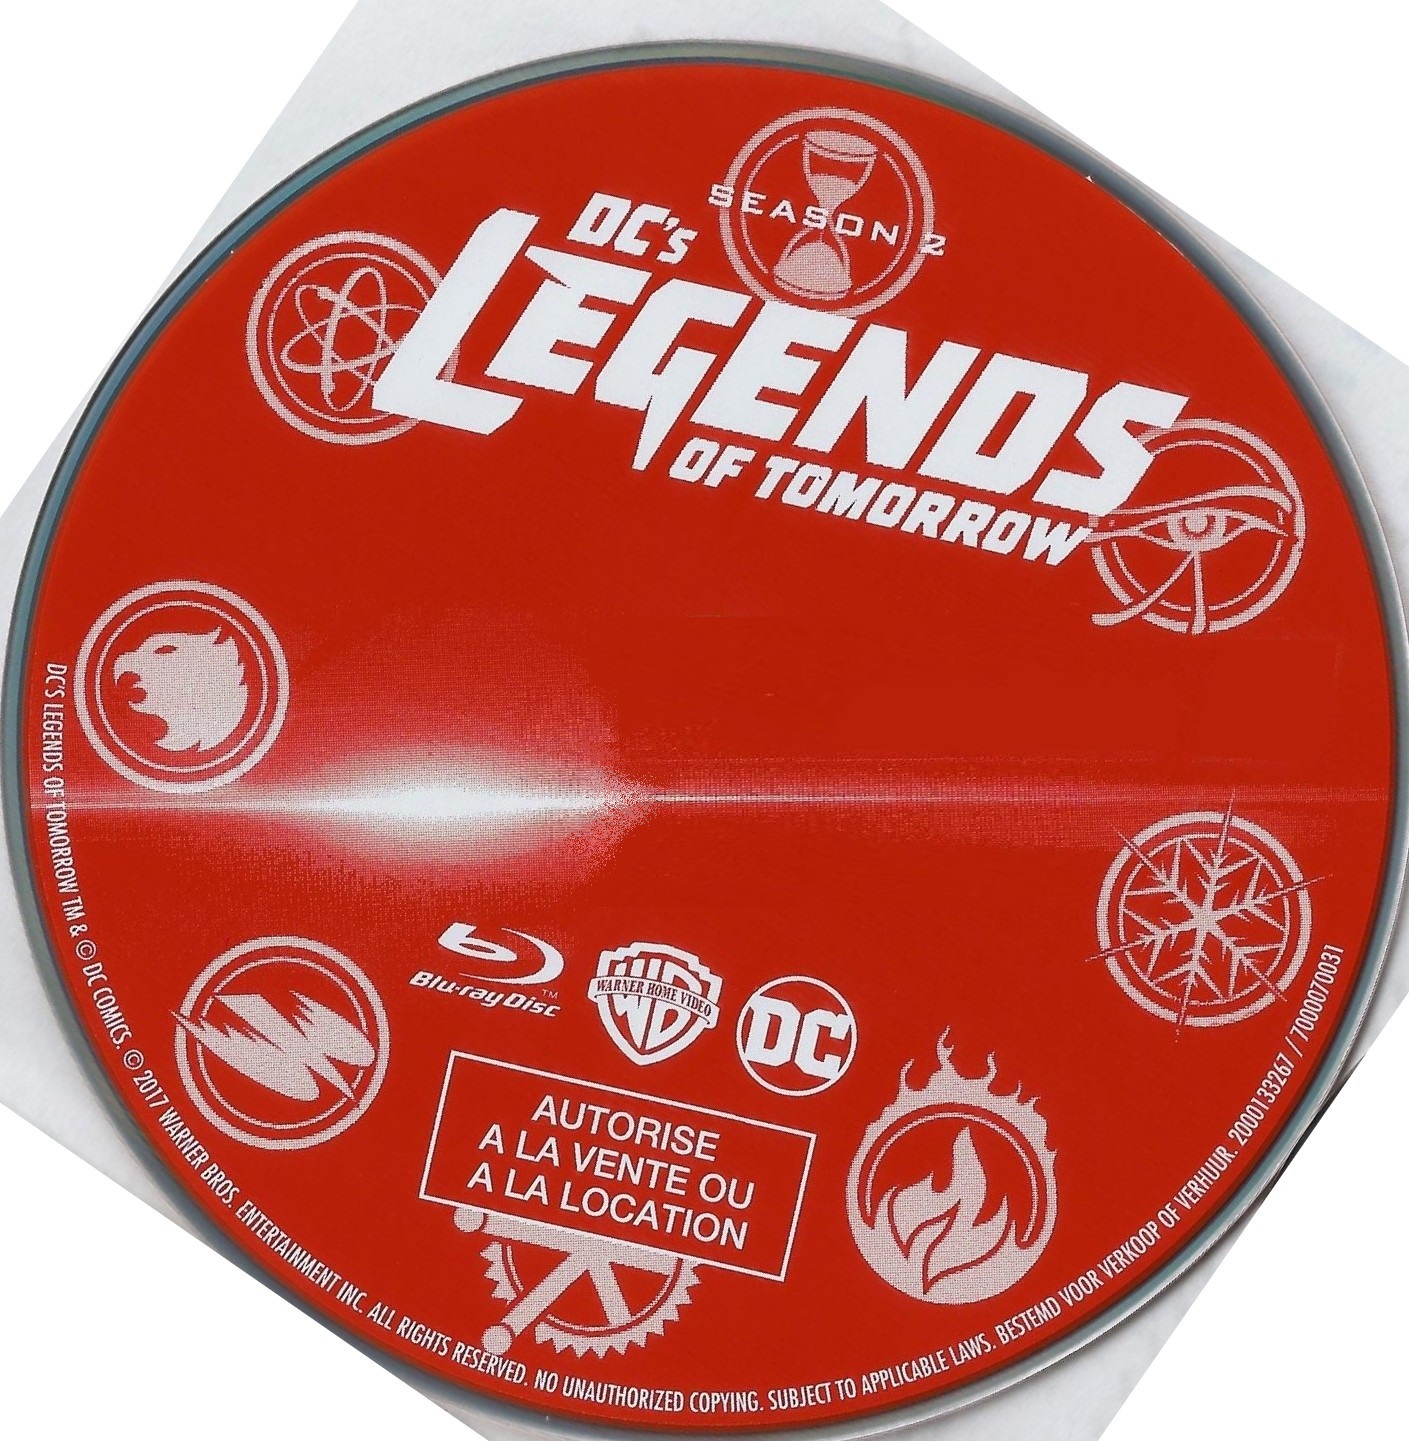 Legends of tomorrow saison 1 custom (BLU-RAY)